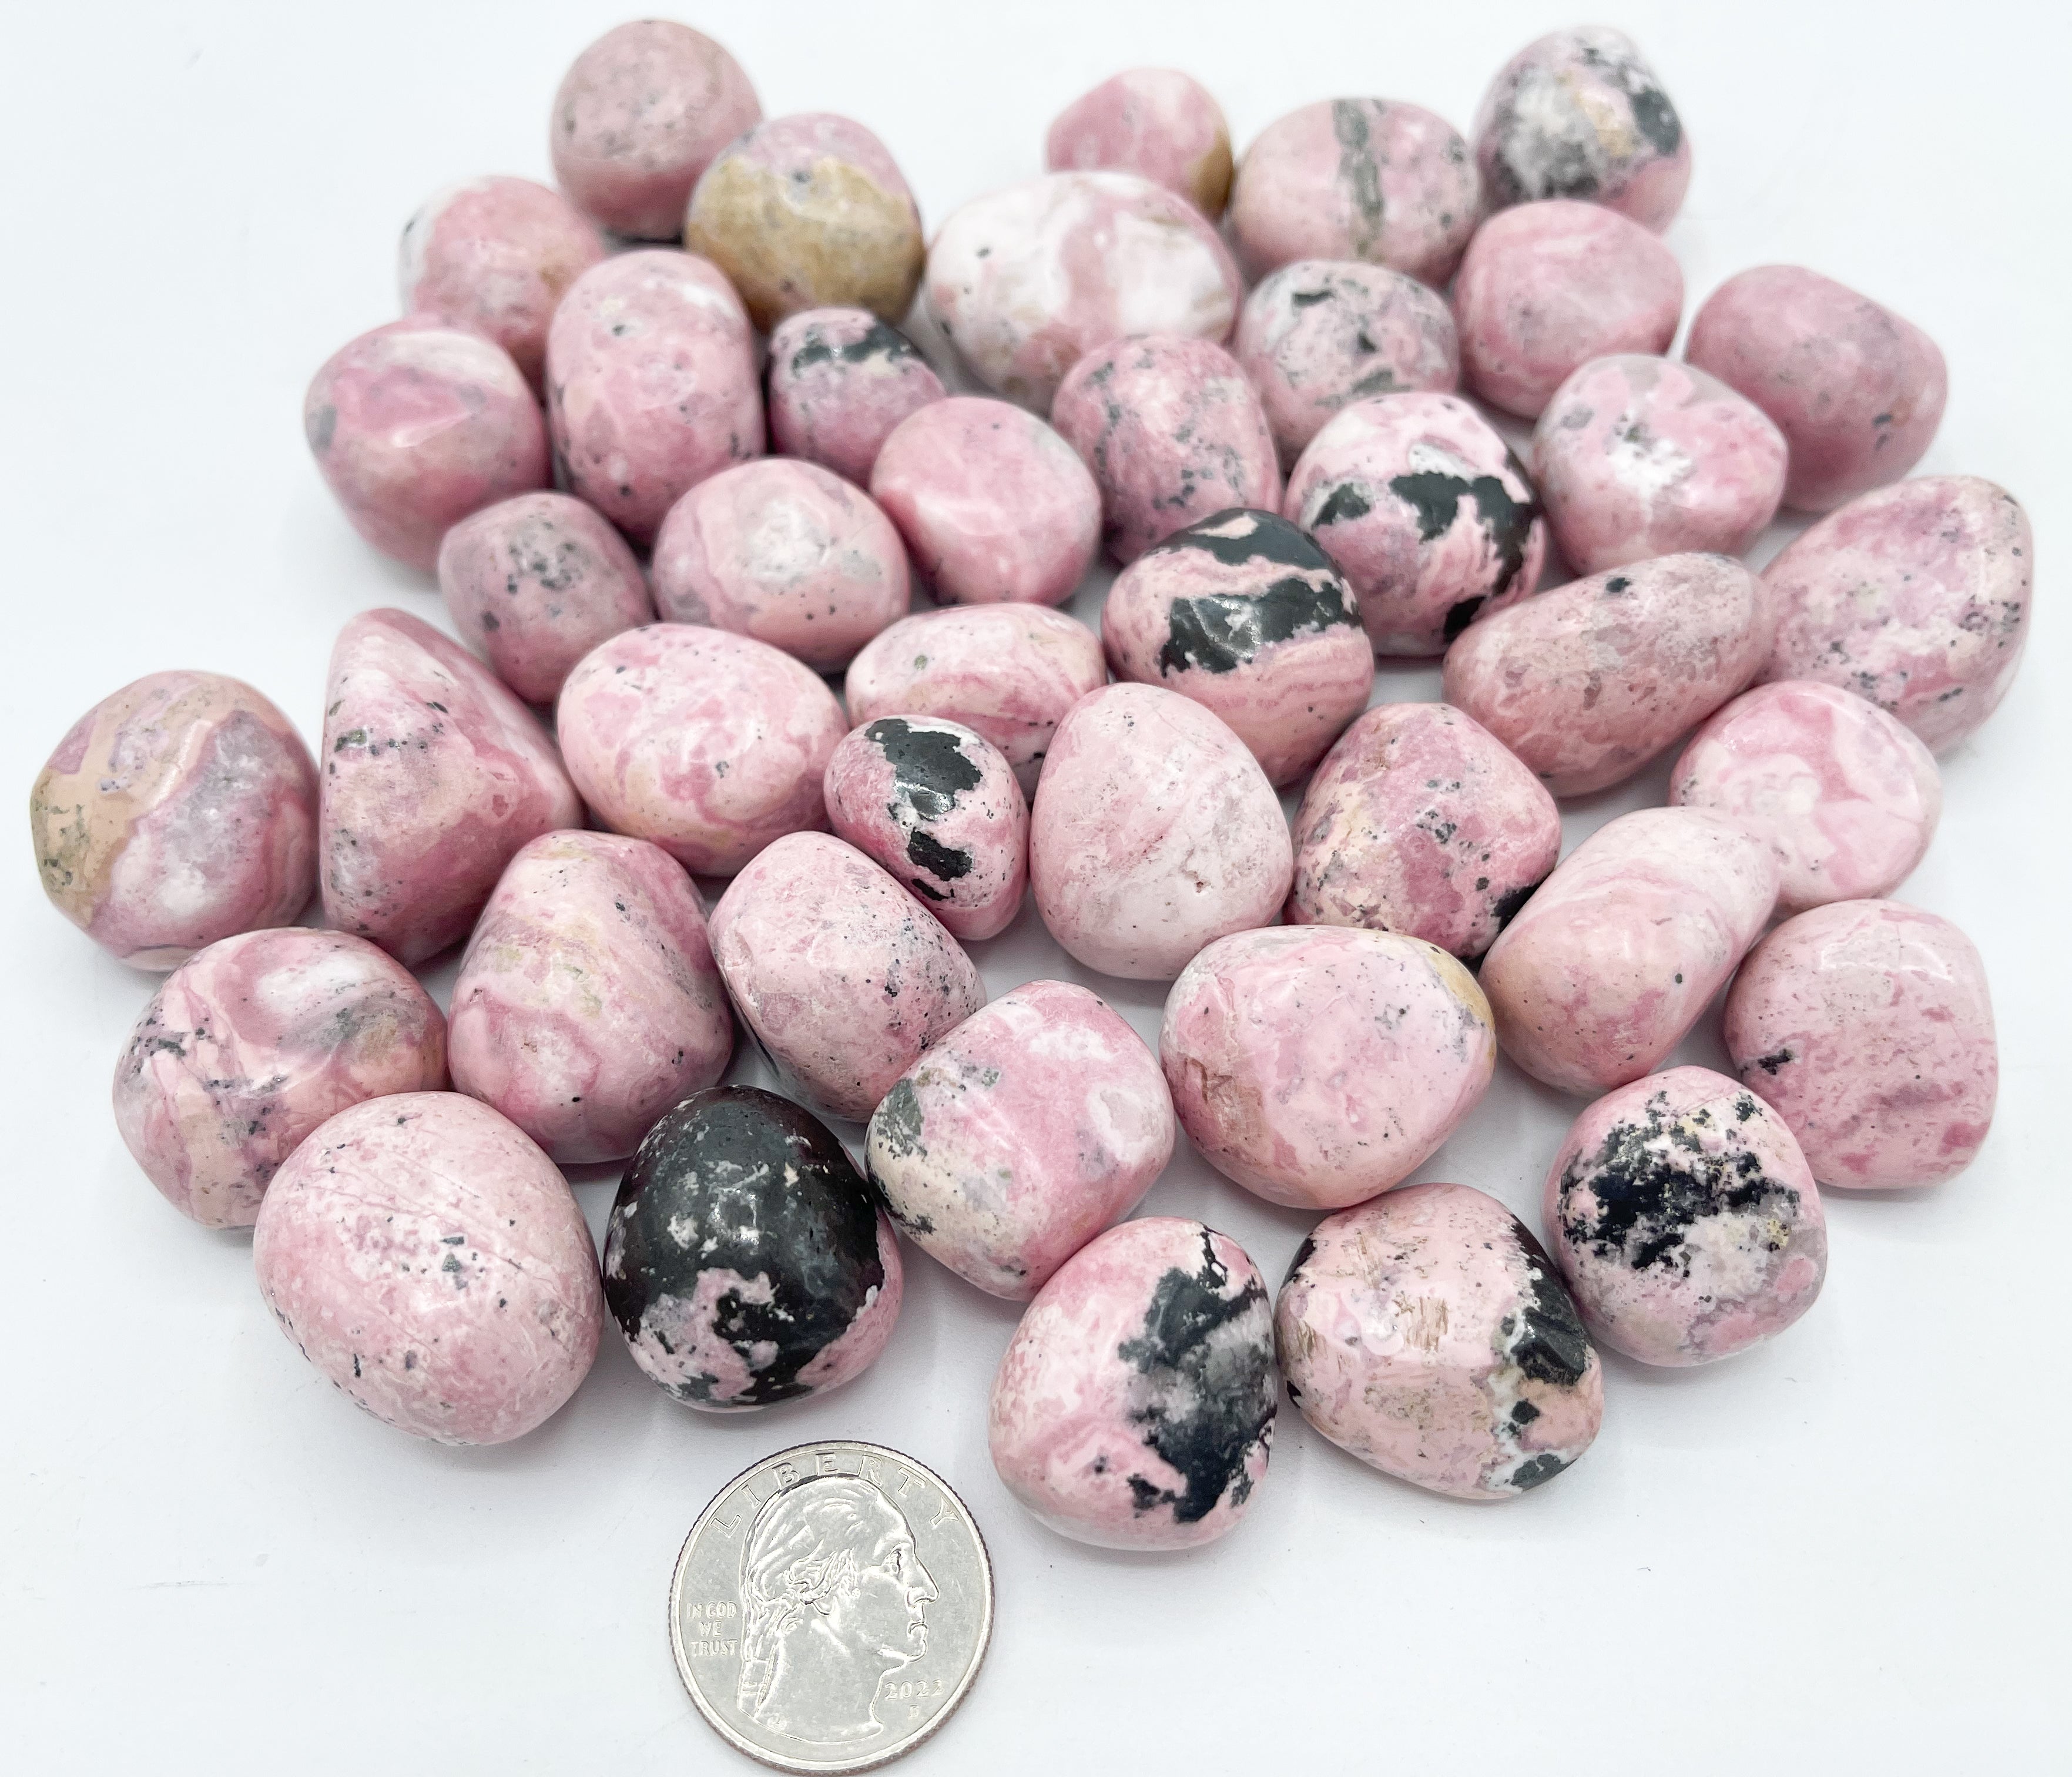 Wholesale rhodonite tumbled stones bulk 1kg lot